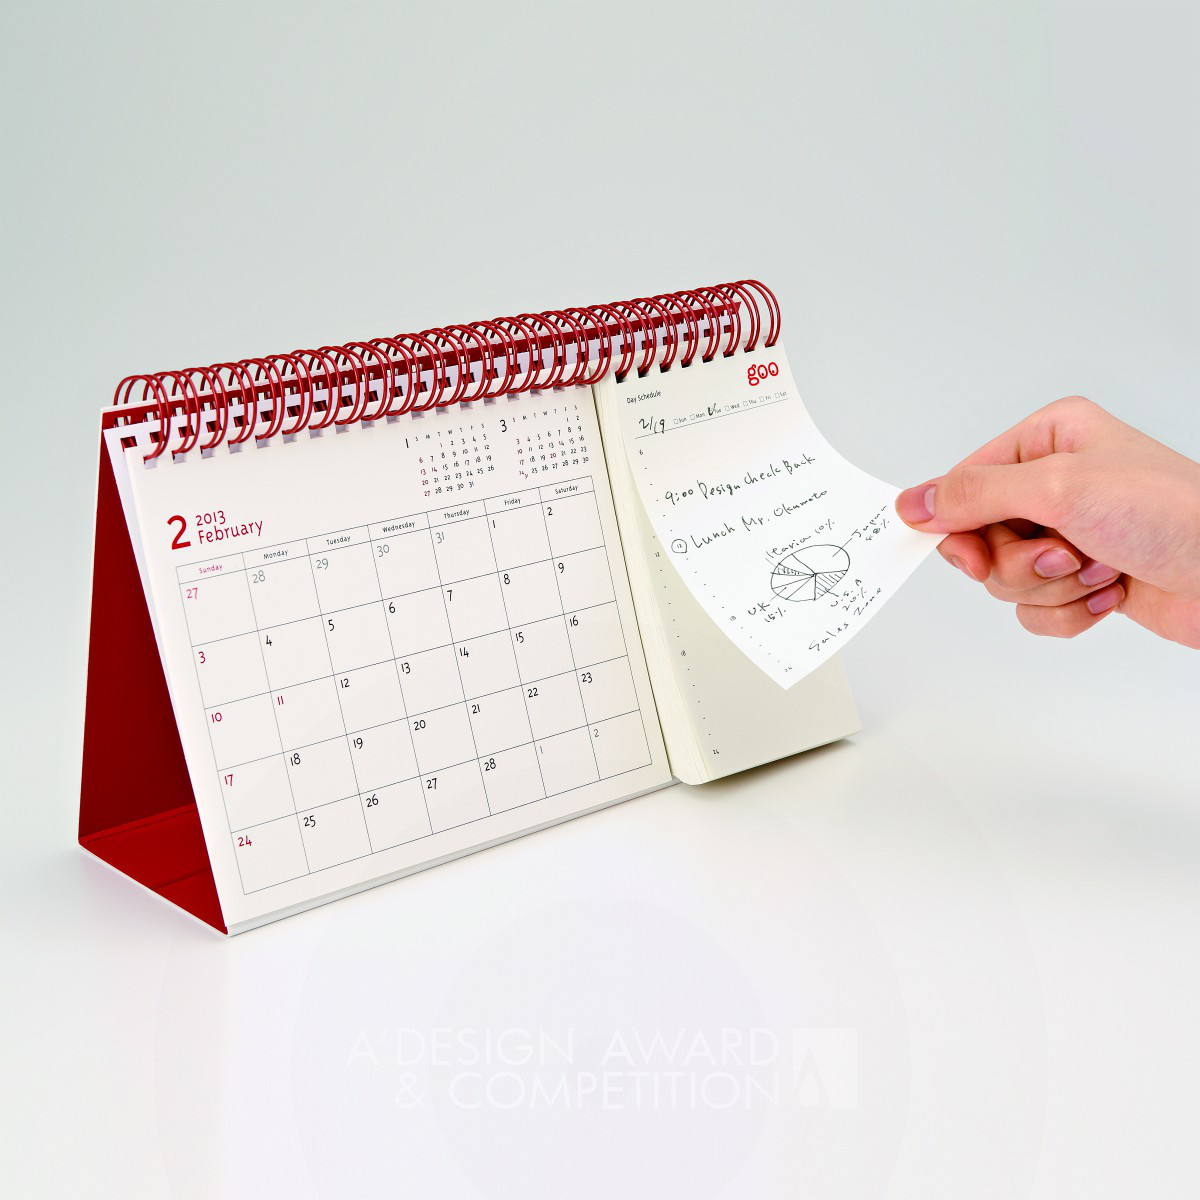 2013 goo Calendar “MONTH & DAY” Calendar by Katsumi Tamura